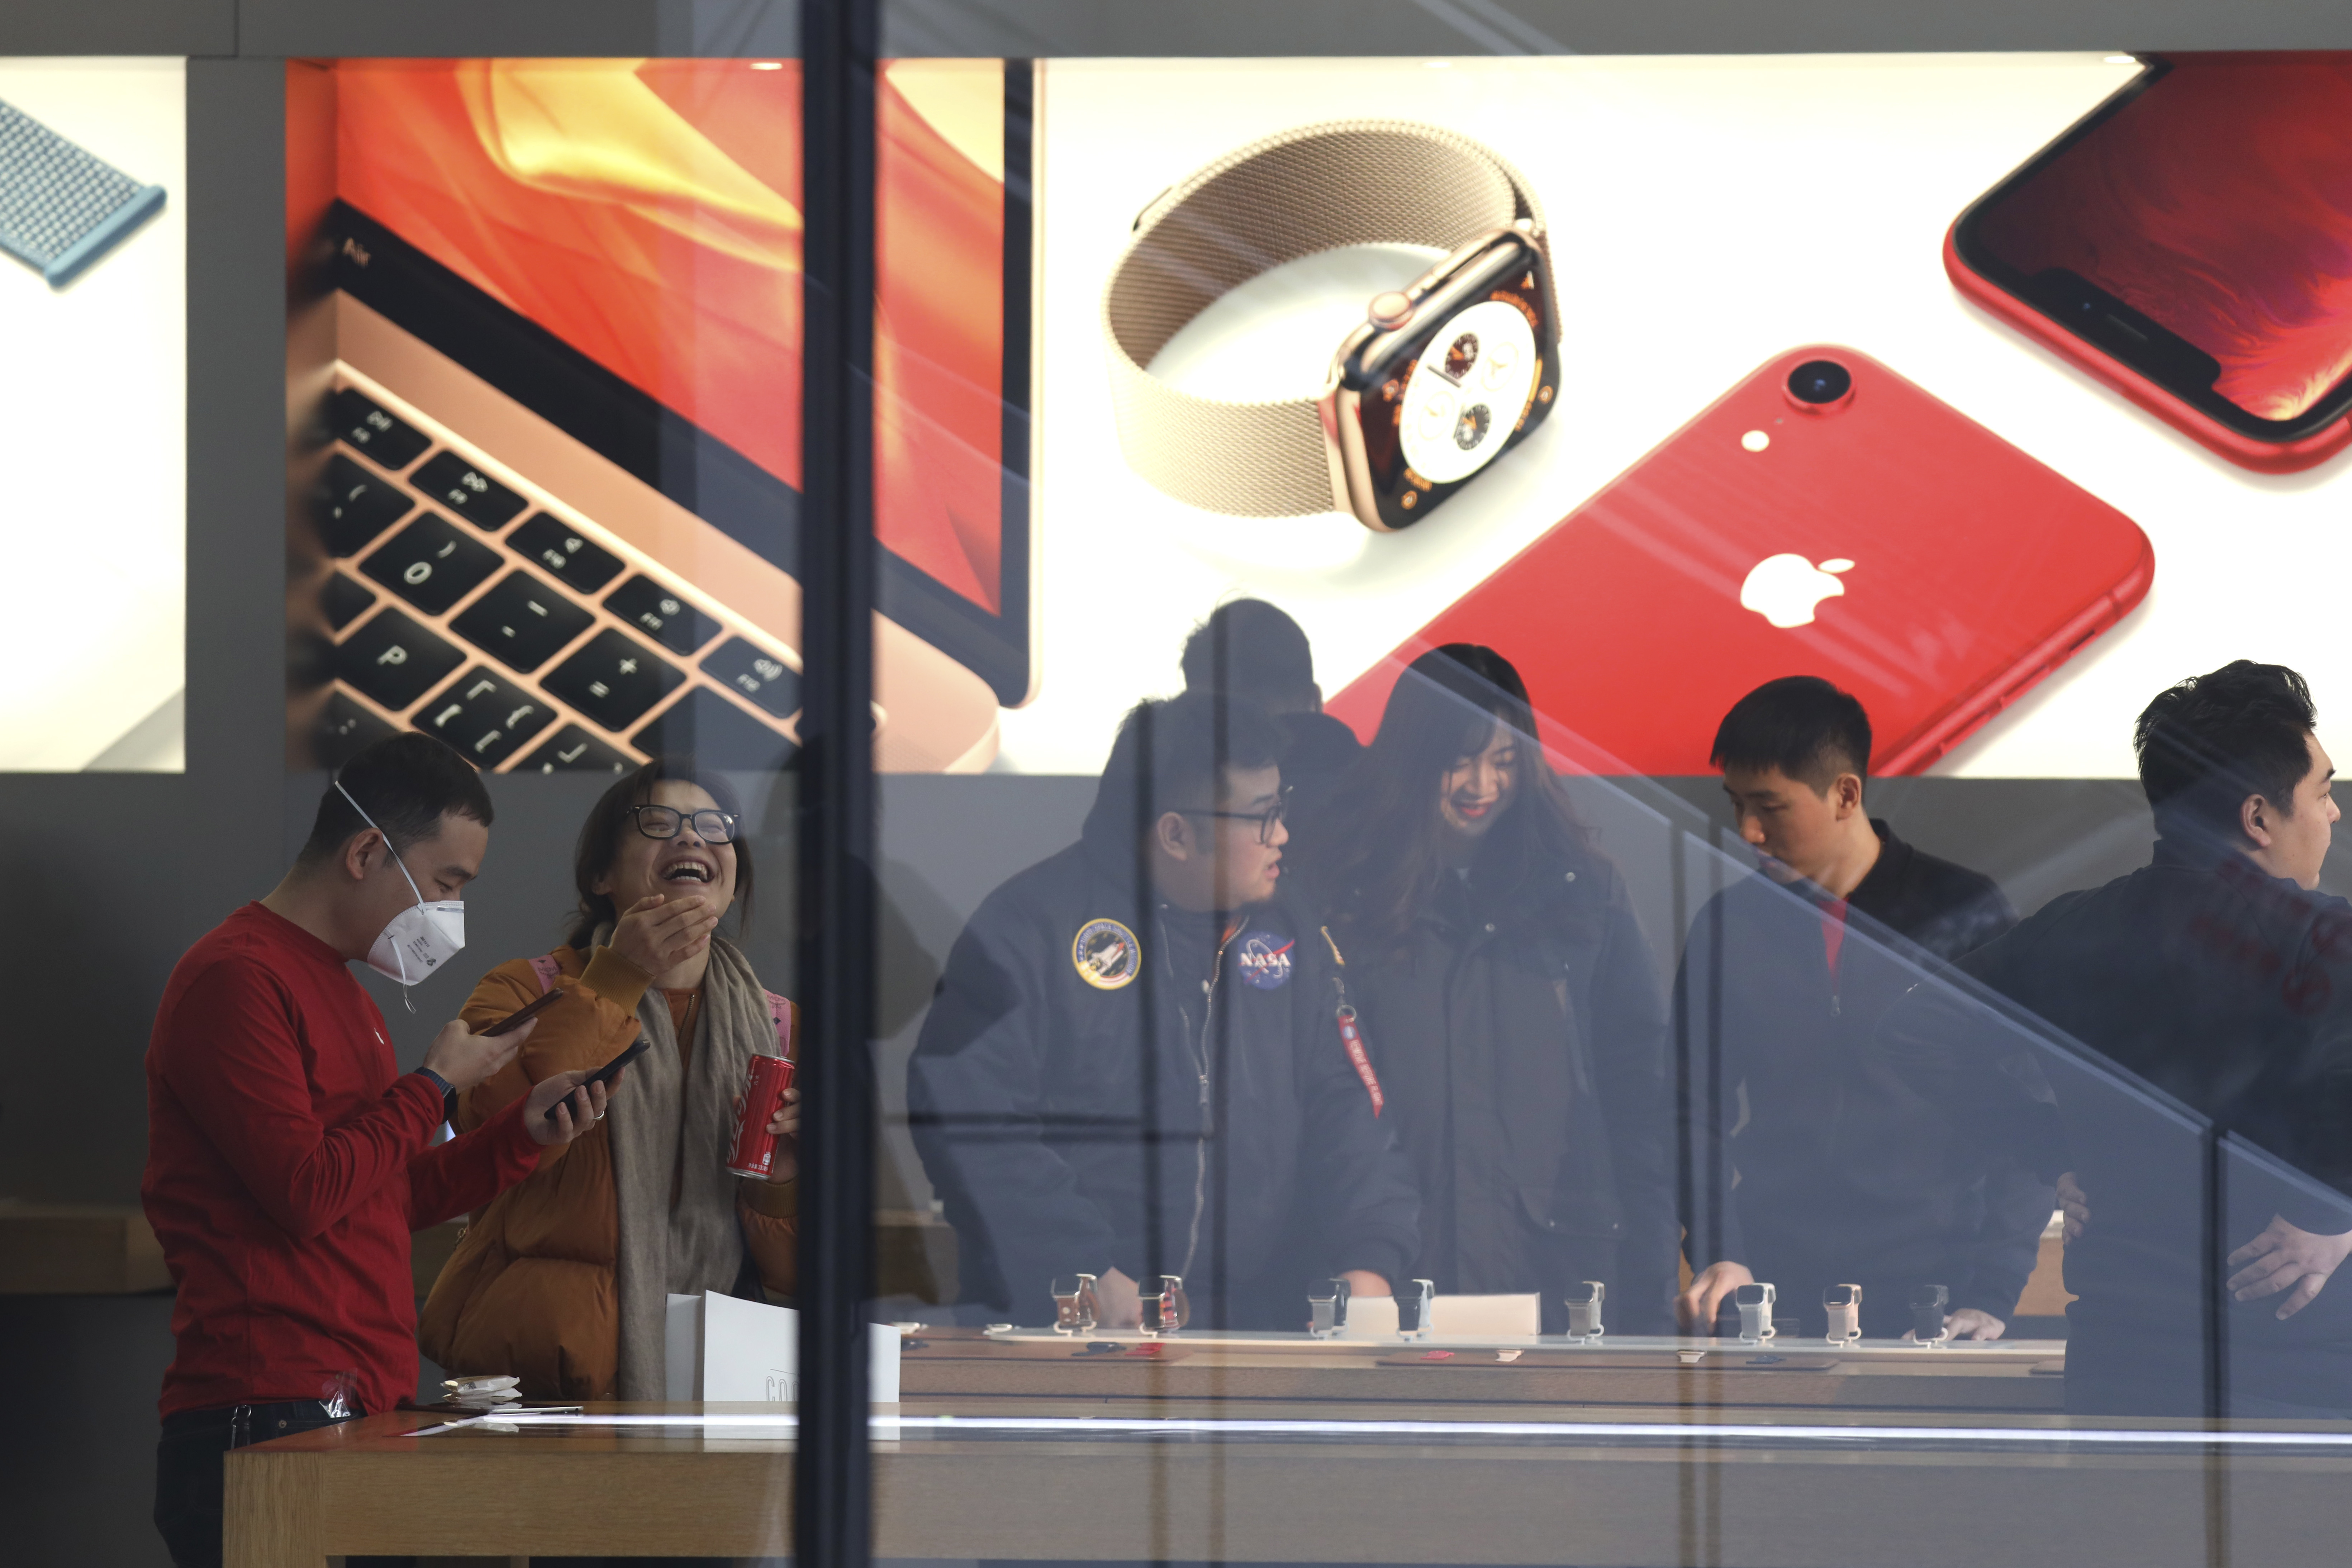 jammer gun parts group - Waning iPhone Demand Highlights Chinese Consumer Anxiety